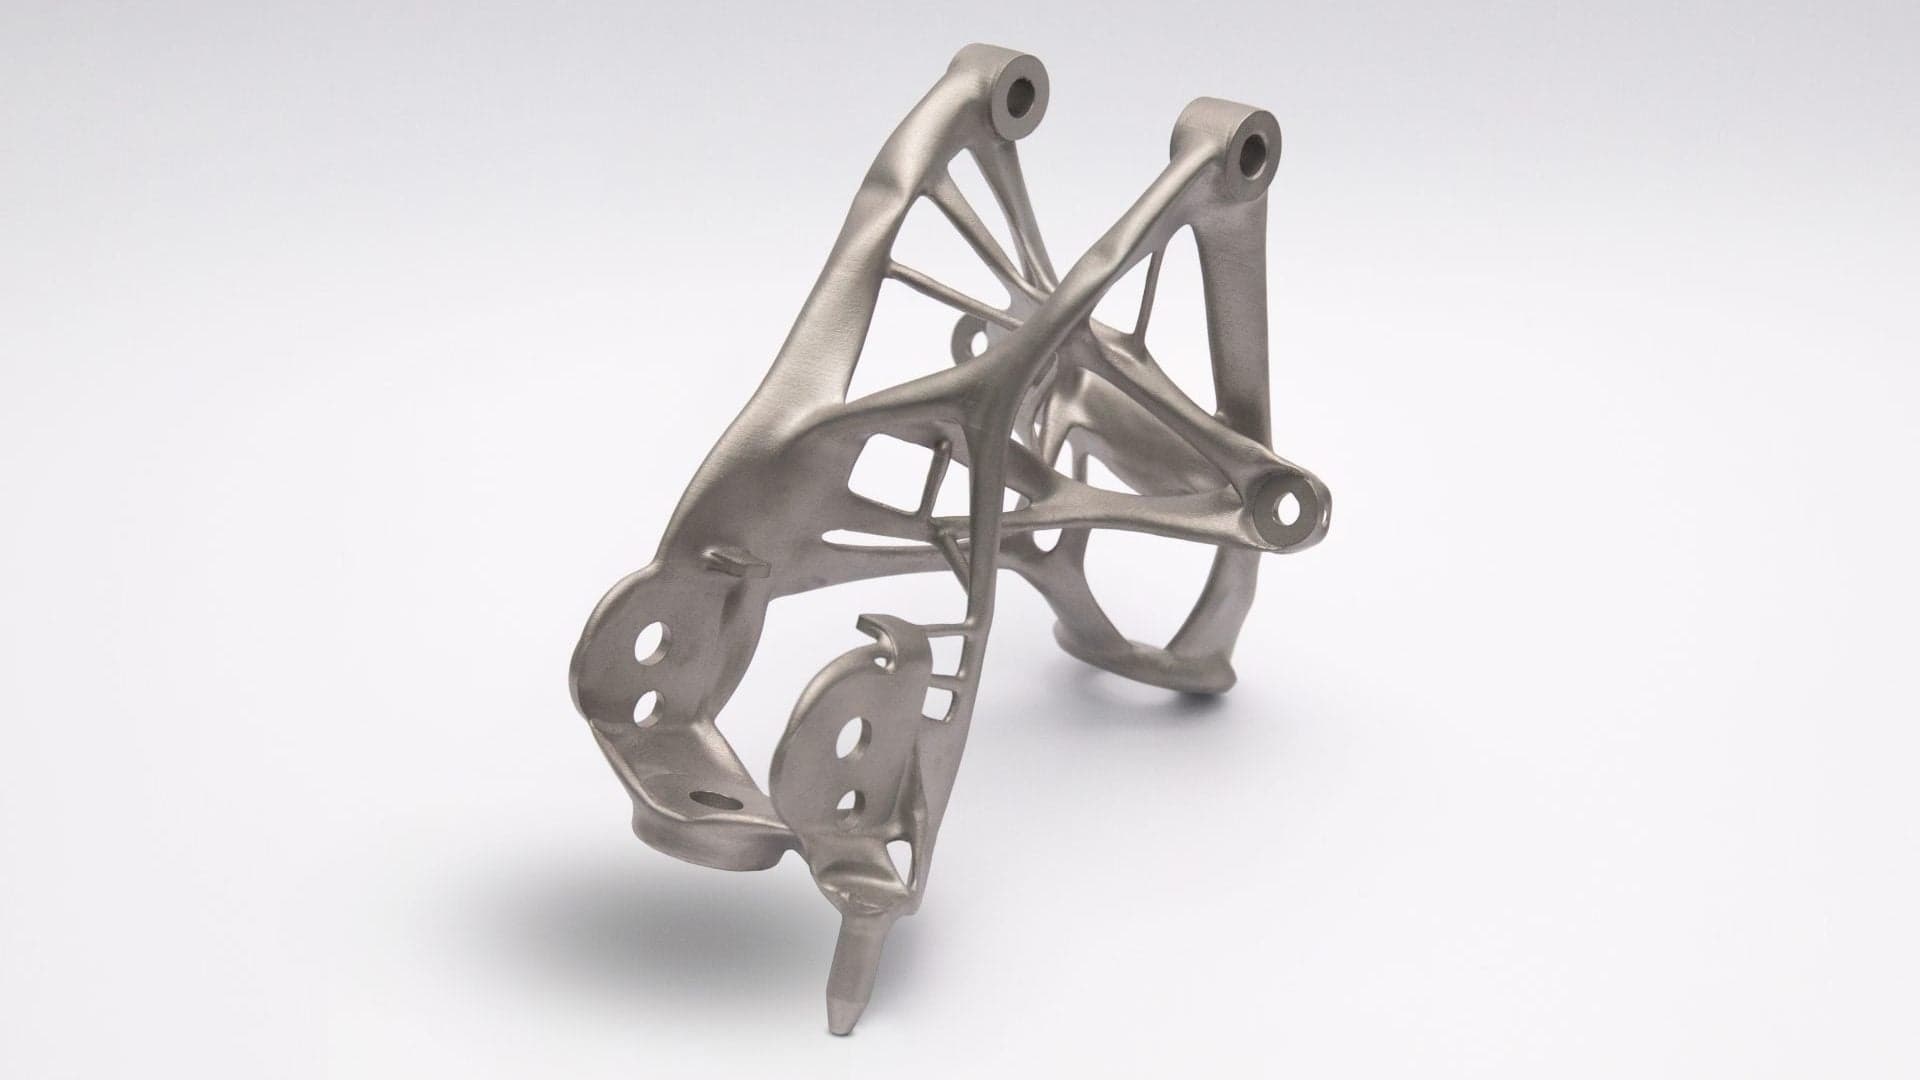 GM Explains Its Plans for 3D Printing Better Car Parts